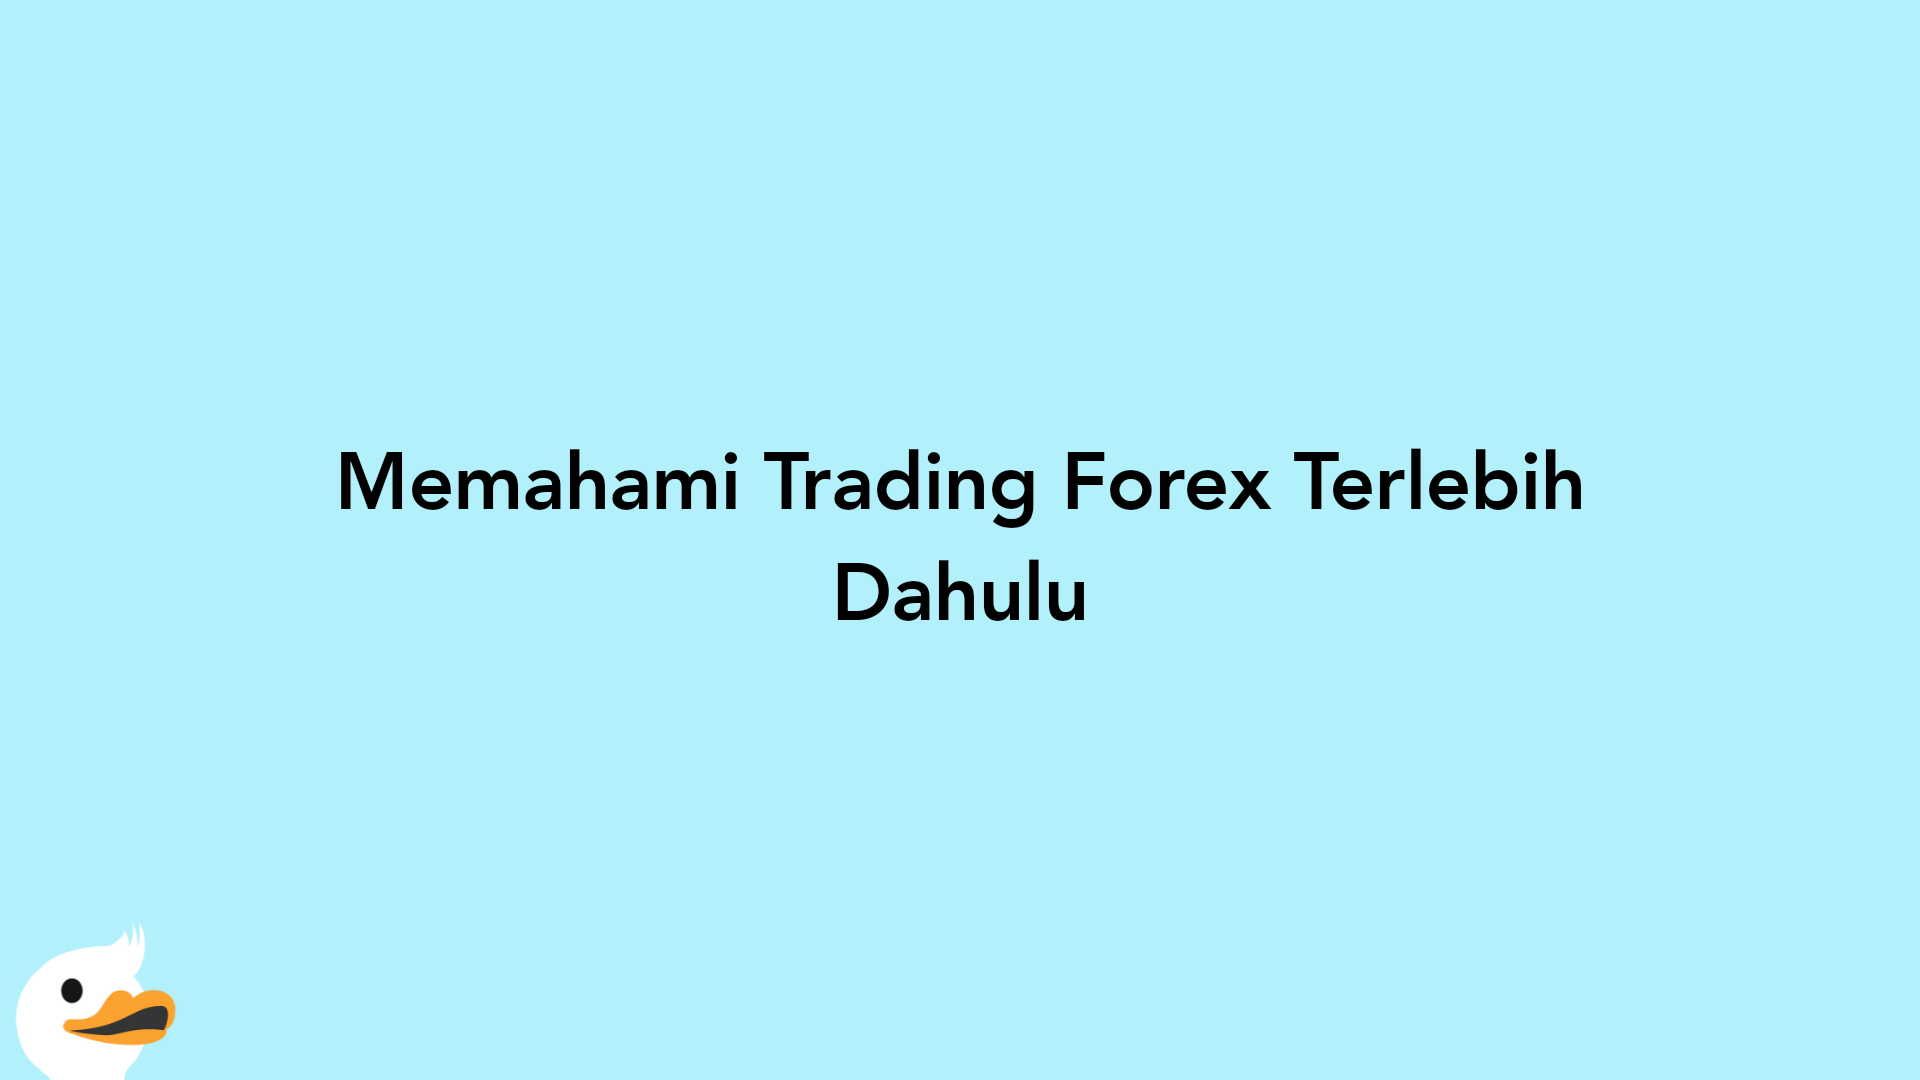 Memahami Trading Forex Terlebih Dahulu